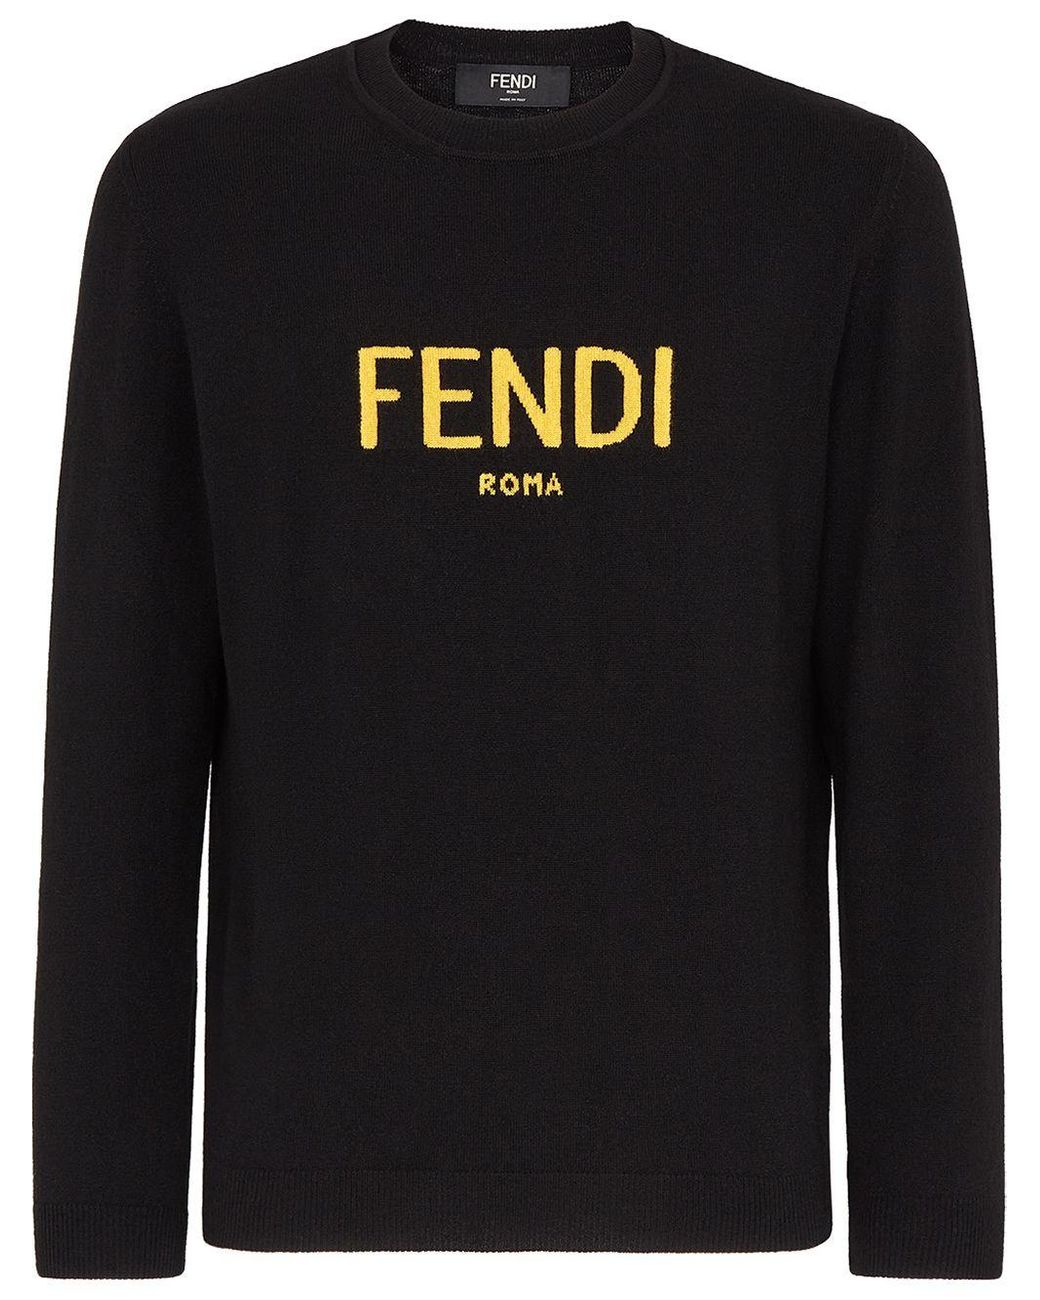 Fendi Cashmere Roma Crew Neck Jumper in Black for Men - Save 15% - Lyst